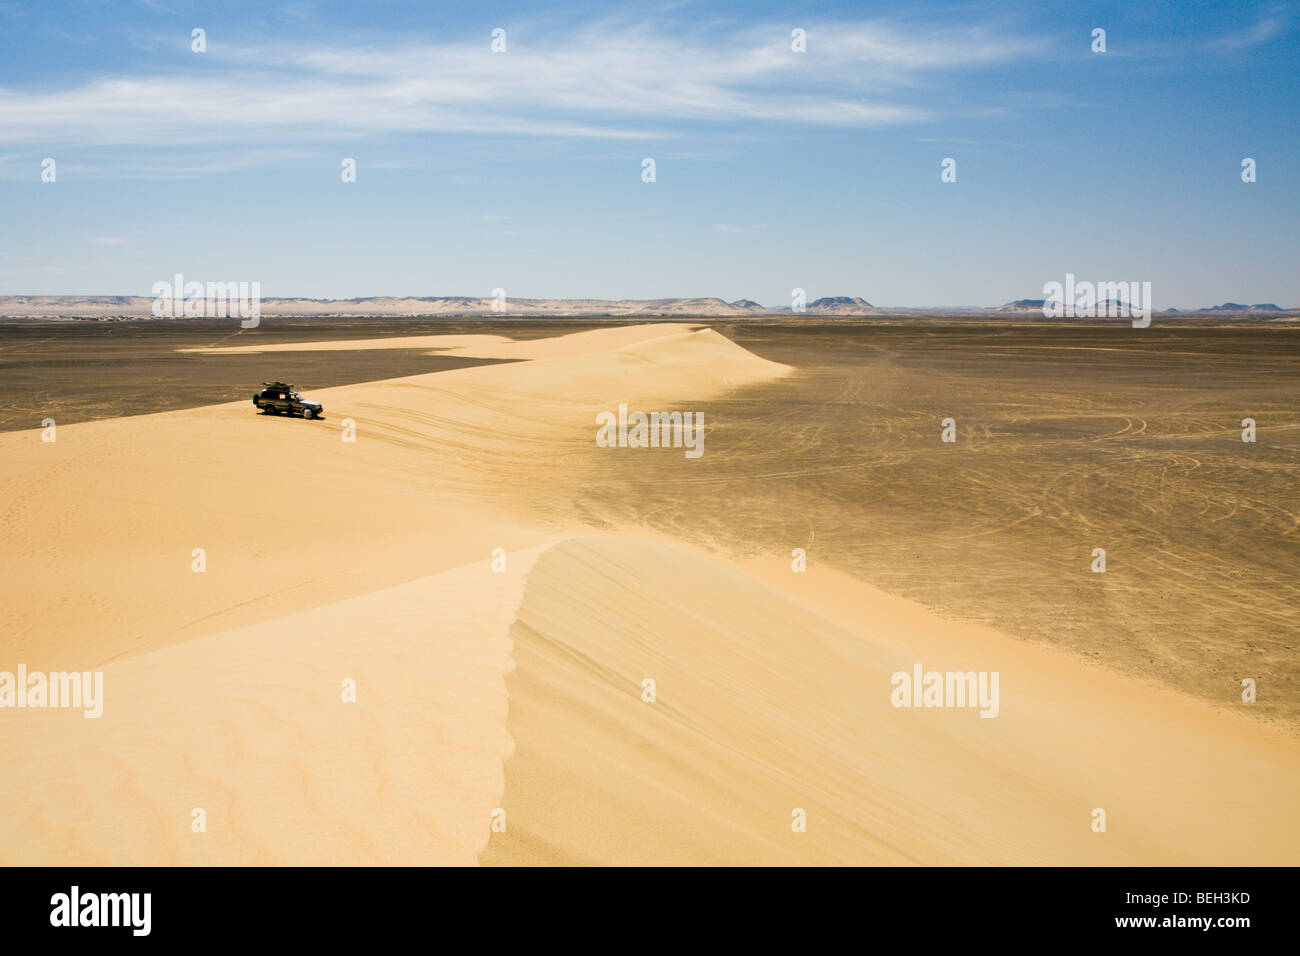 Jeep on Sand Dune, Libyan Desert, Egypt Stock Photo